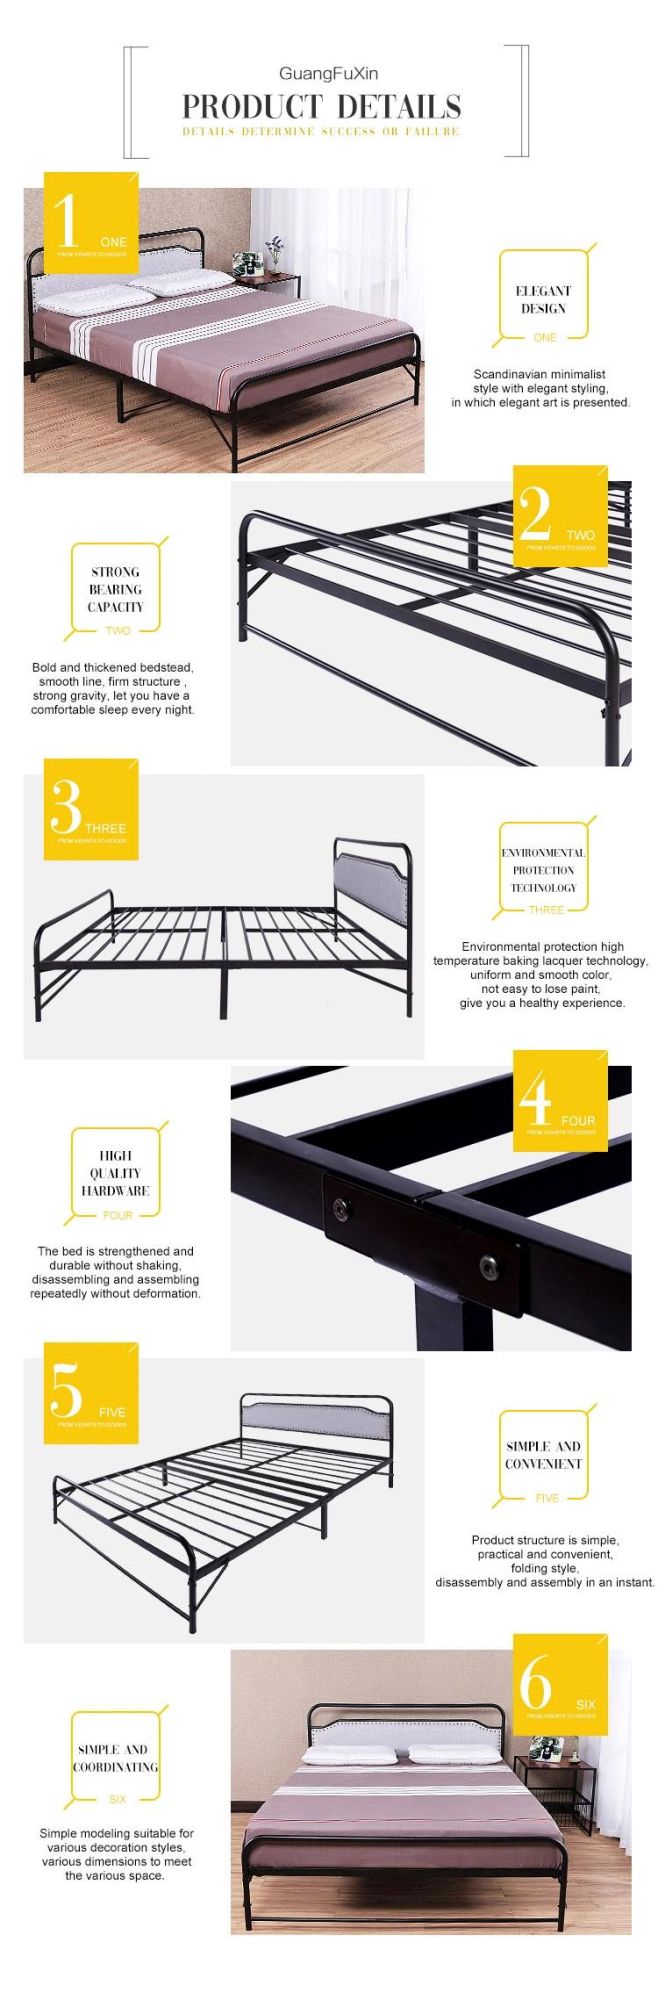 Hot Sale Manufacturer Supply Cheap Metal Single Folding Frame Bed for Sale